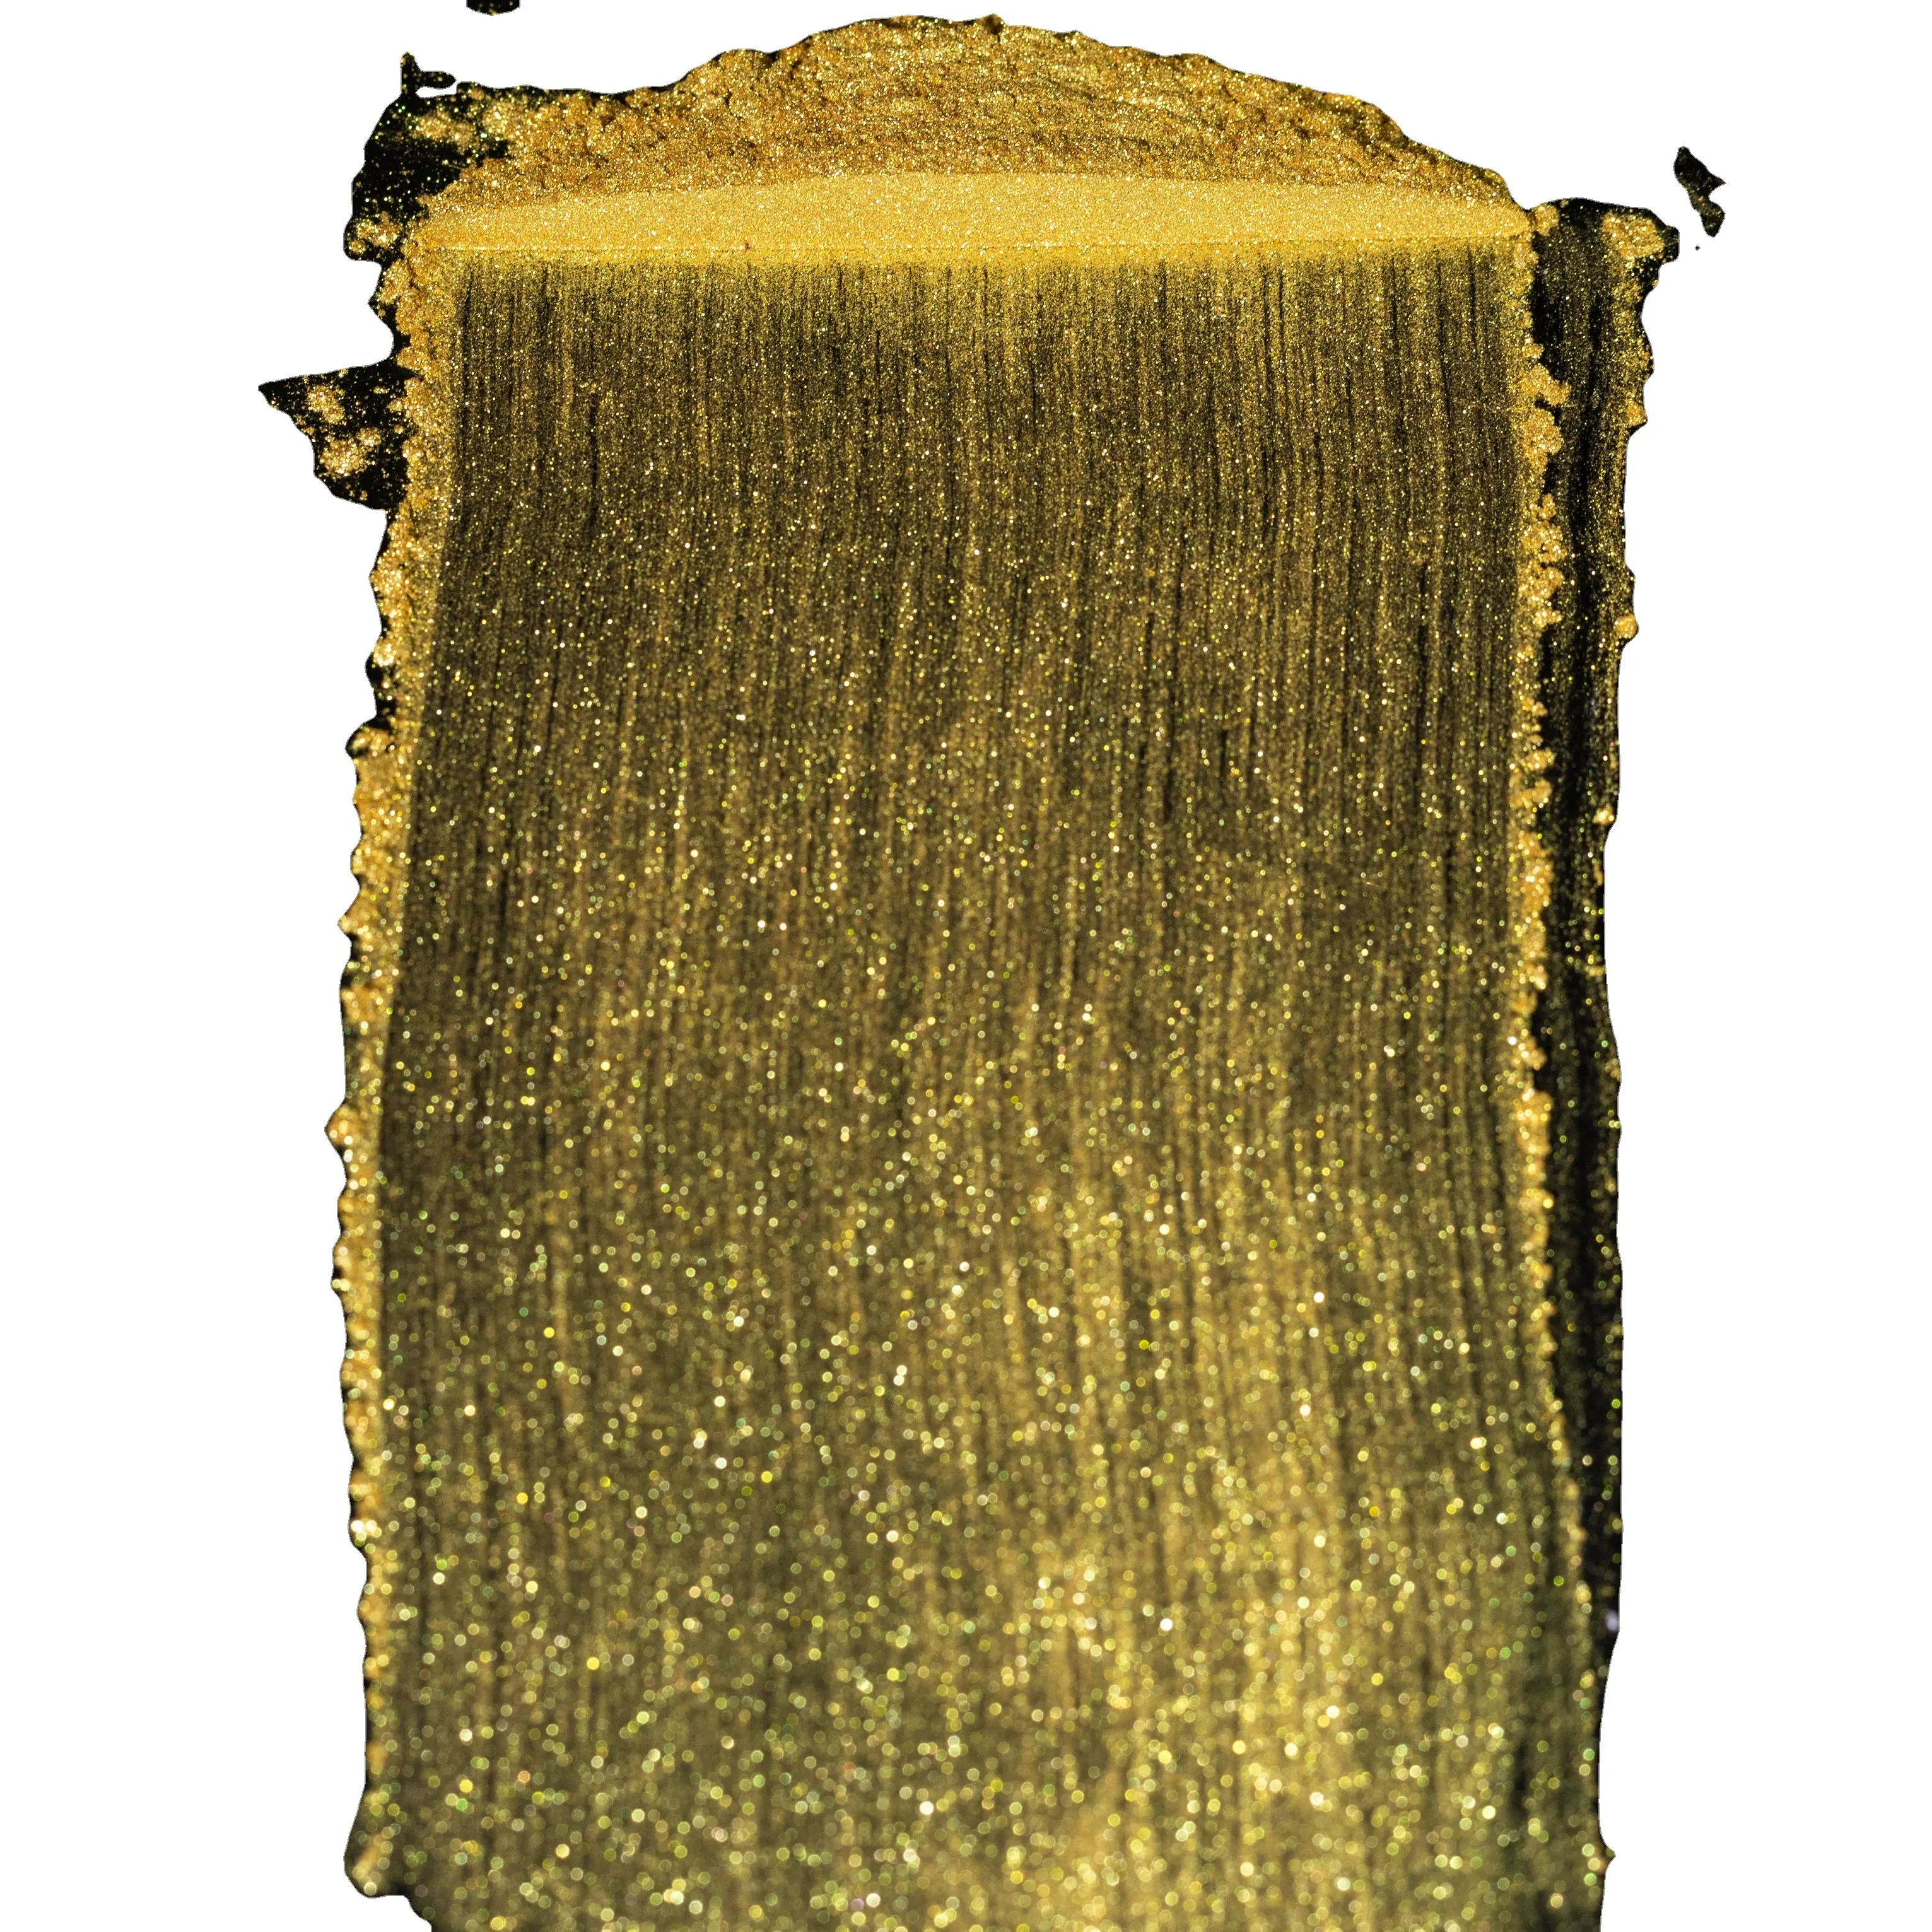 Shimmer Gold LB9315 10-100um,Crystal Golden Powder,Synthetic mica Gold Pigment